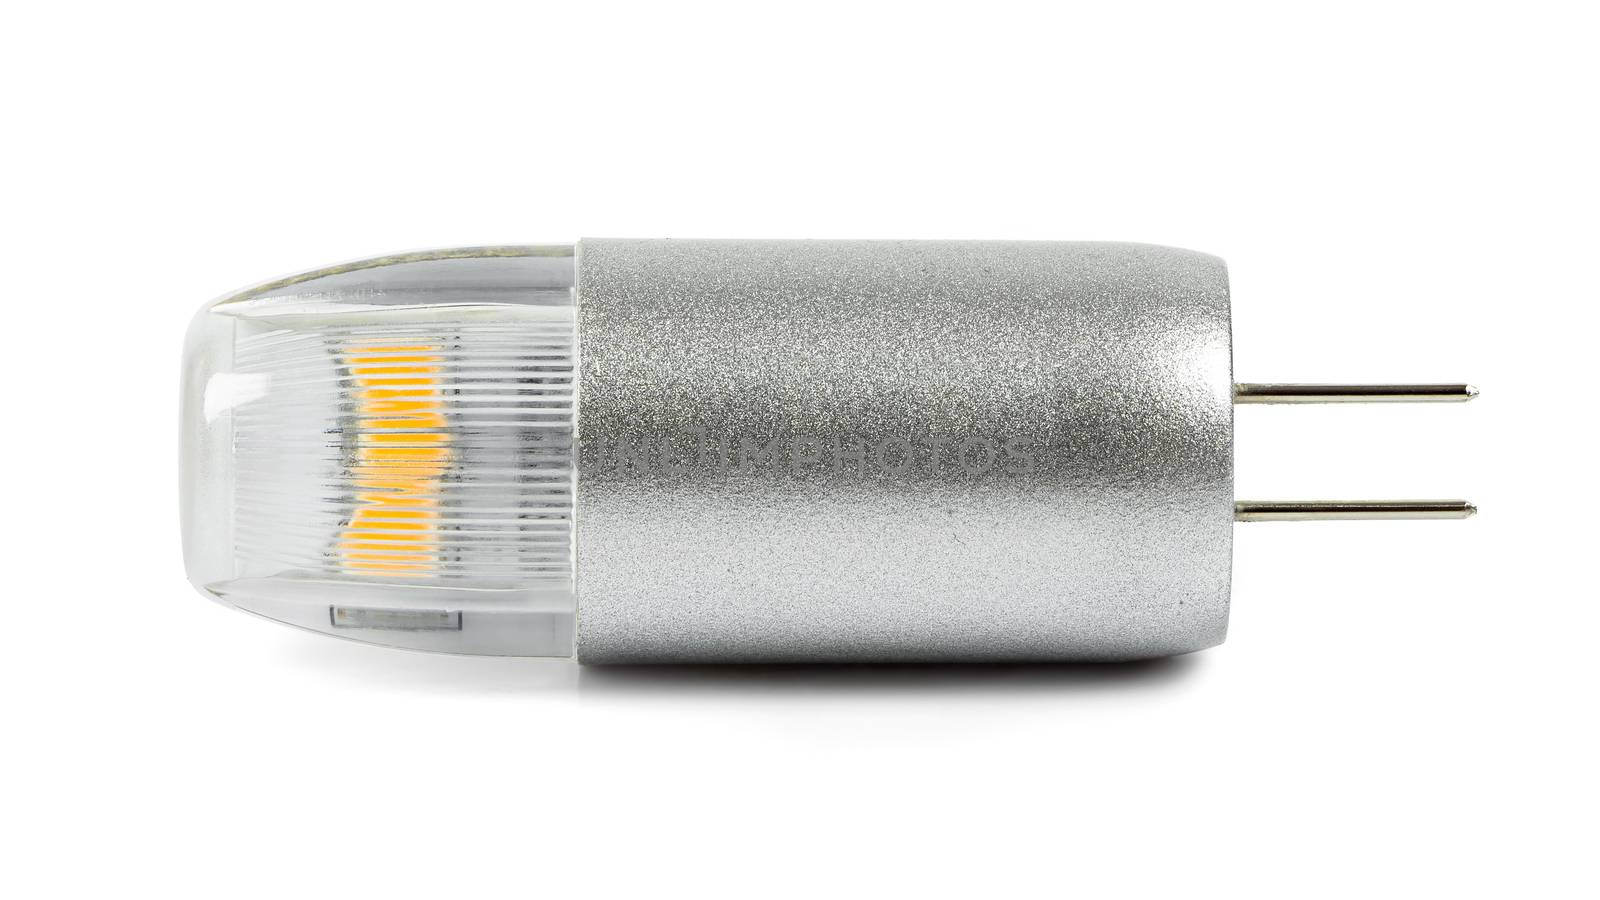 Modern G4 led bulb on white background by mkos83